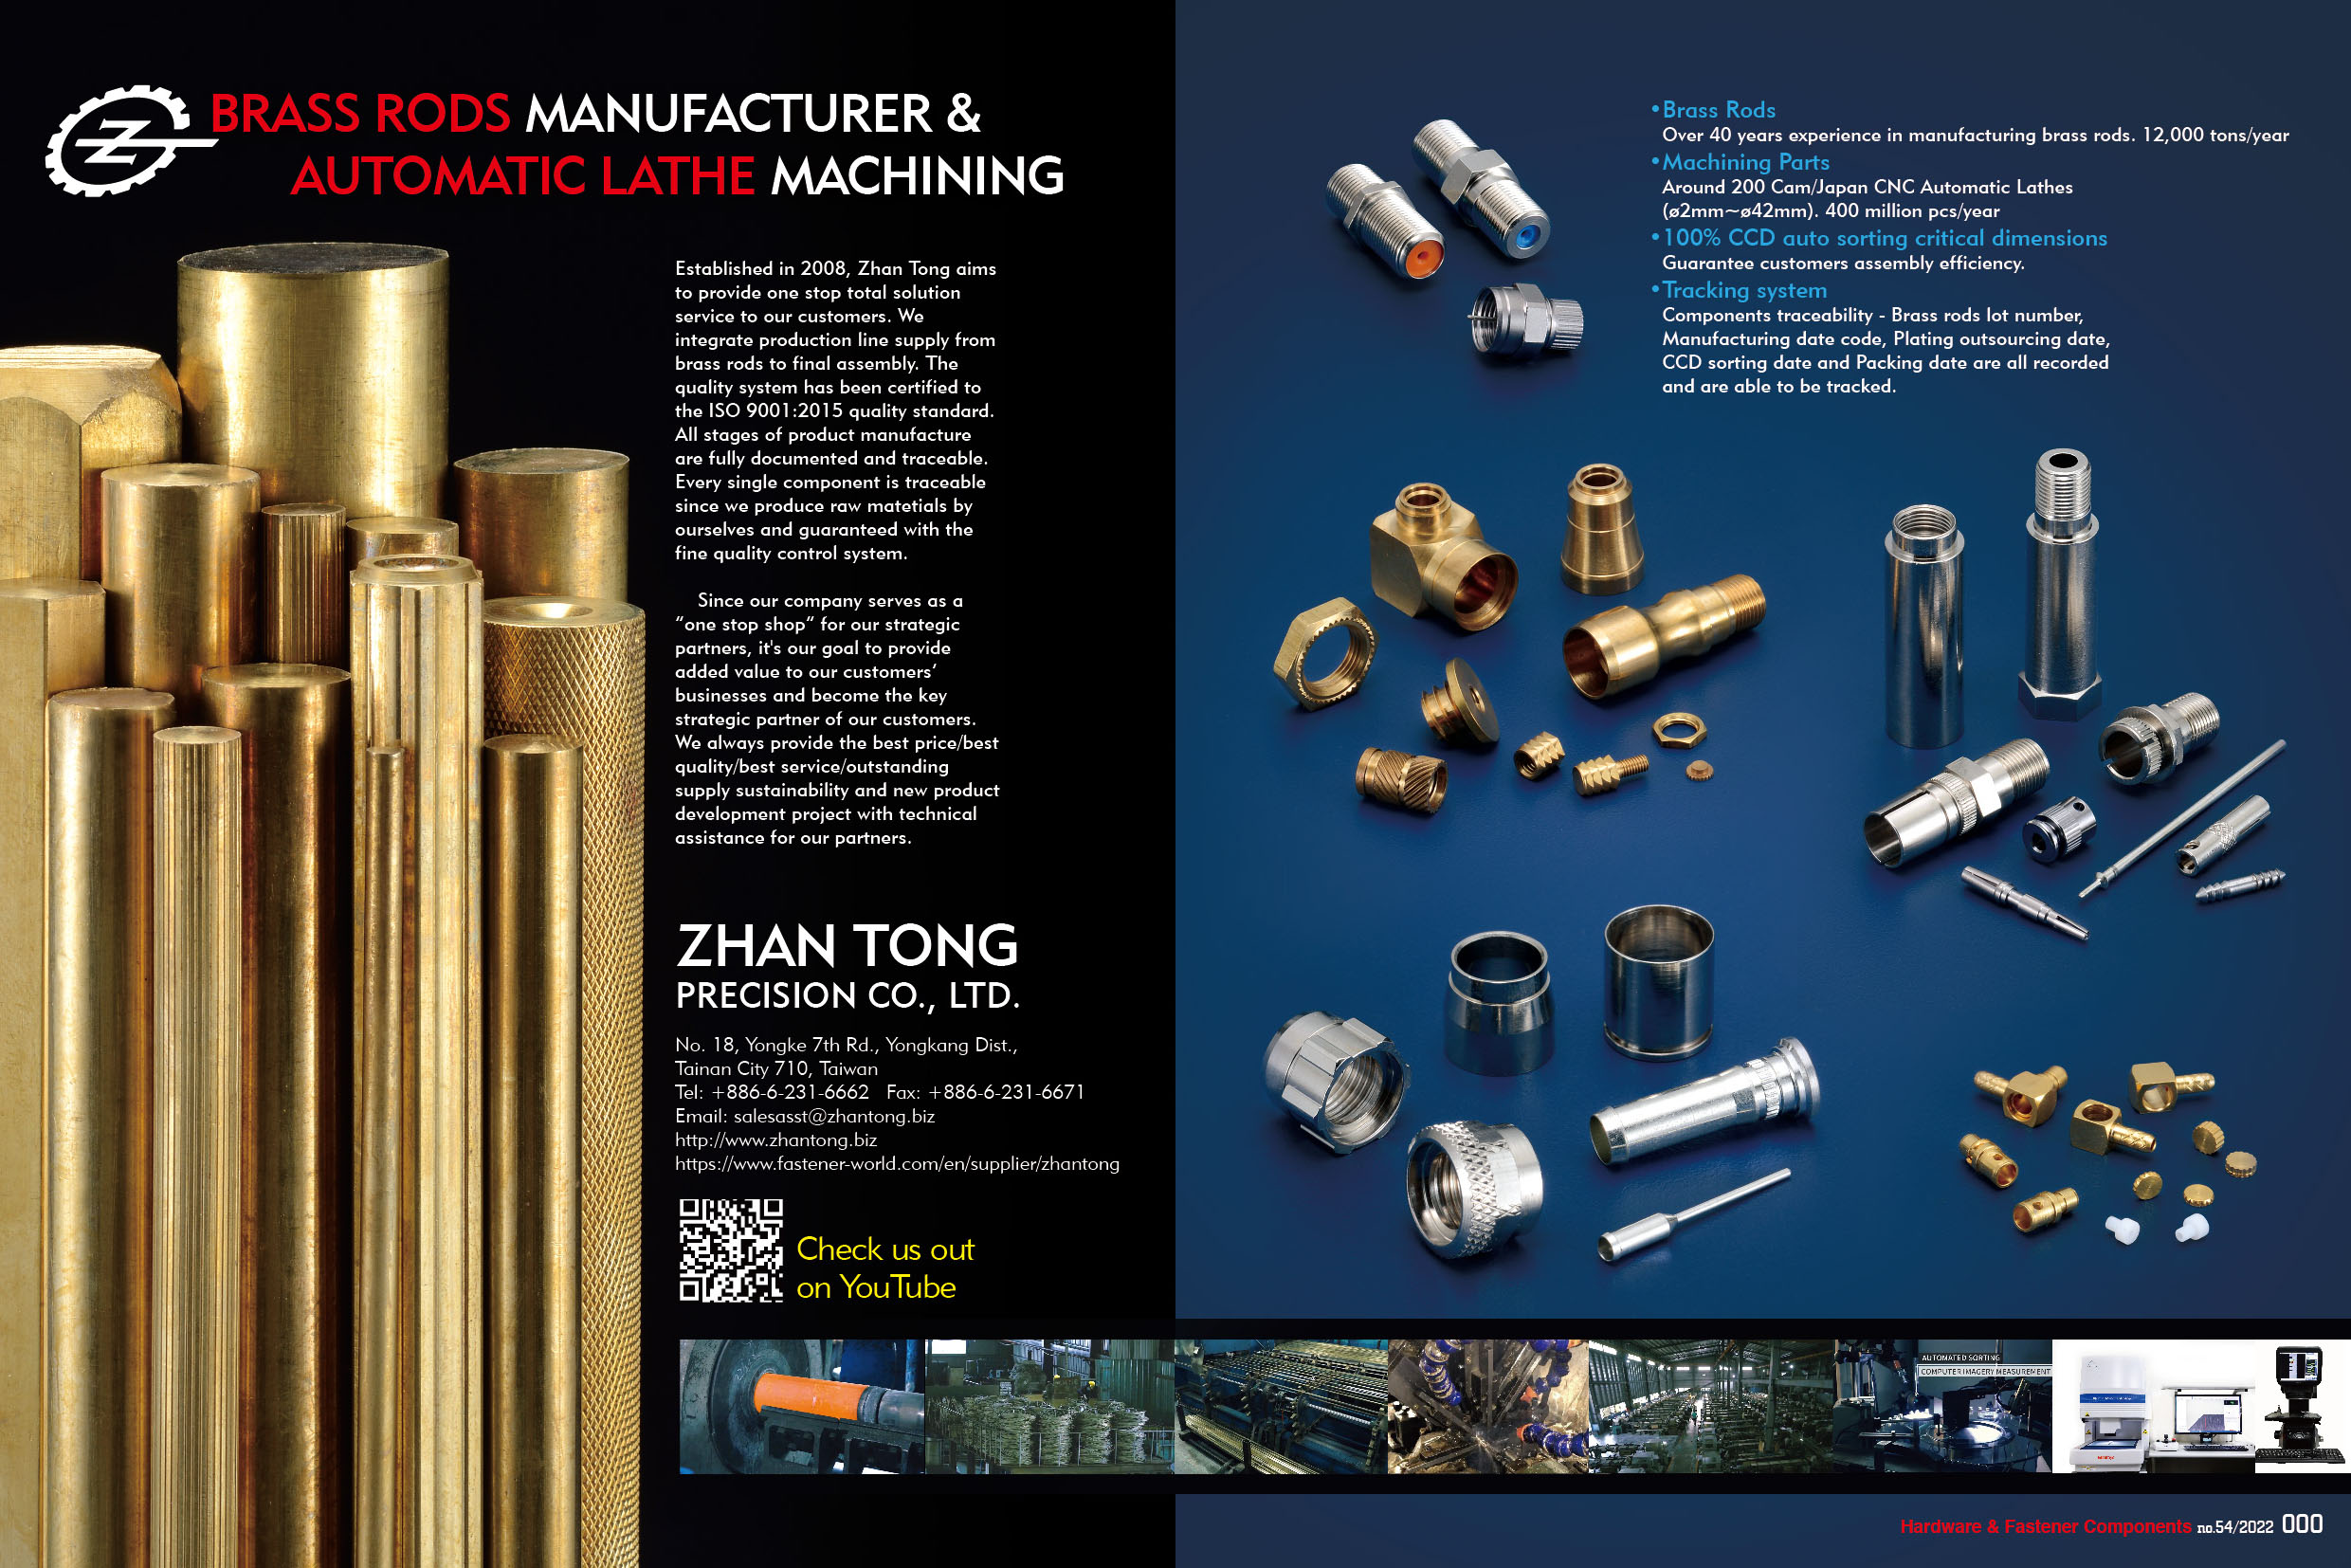 Zhan Tong Precision Co., Ltd. , Brass Rods, Automatic Lathe Machining, Machining Parts